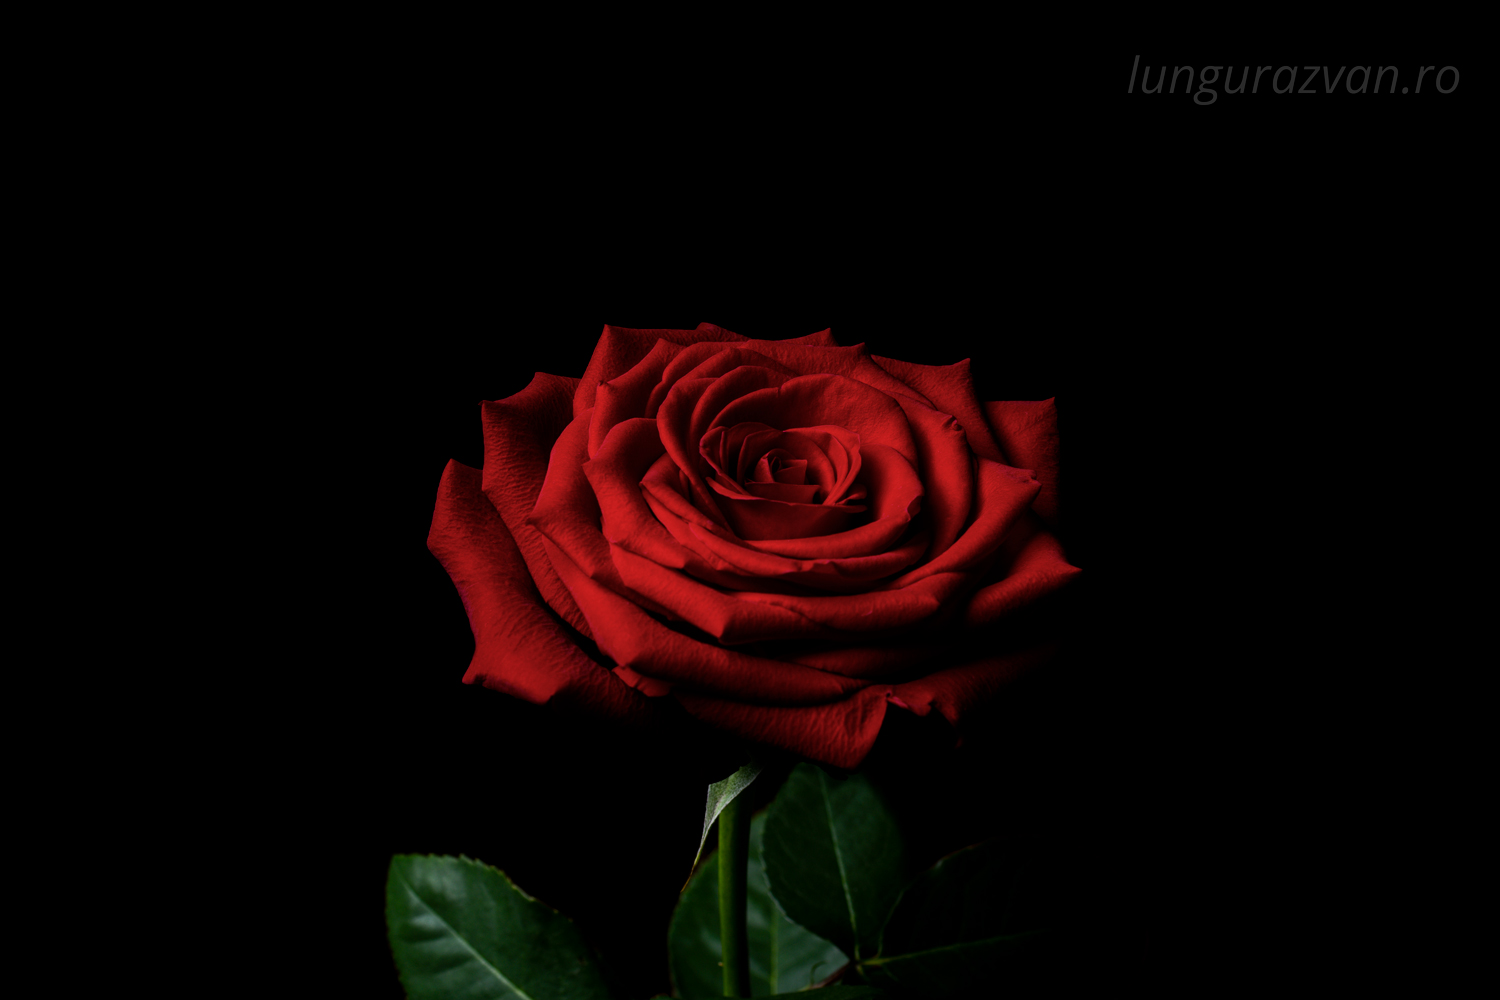 Romance in the Dark, beautiful red rose in the dark